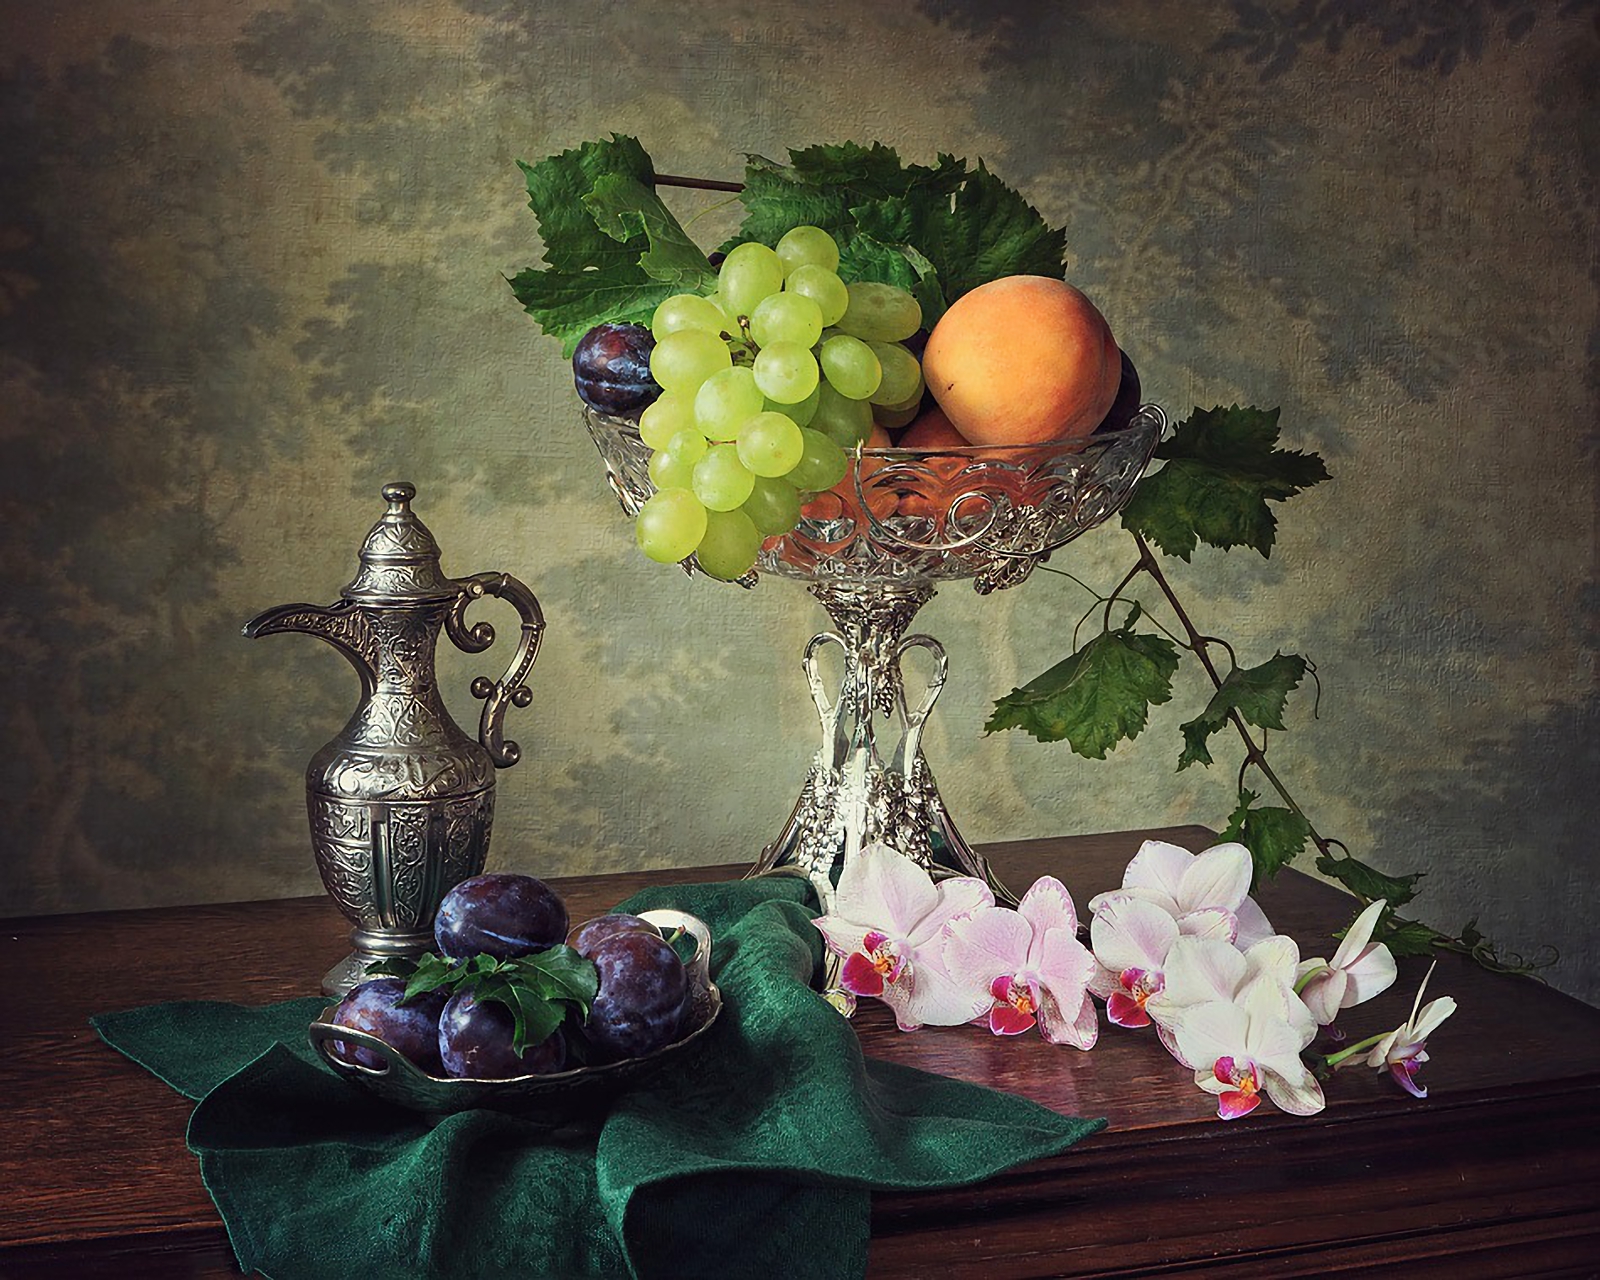 800117 baixar imagens fotografia, natureza morta, fruta, uvas, orquídea, jarro, ameixa - papéis de parede e protetores de tela gratuitamente